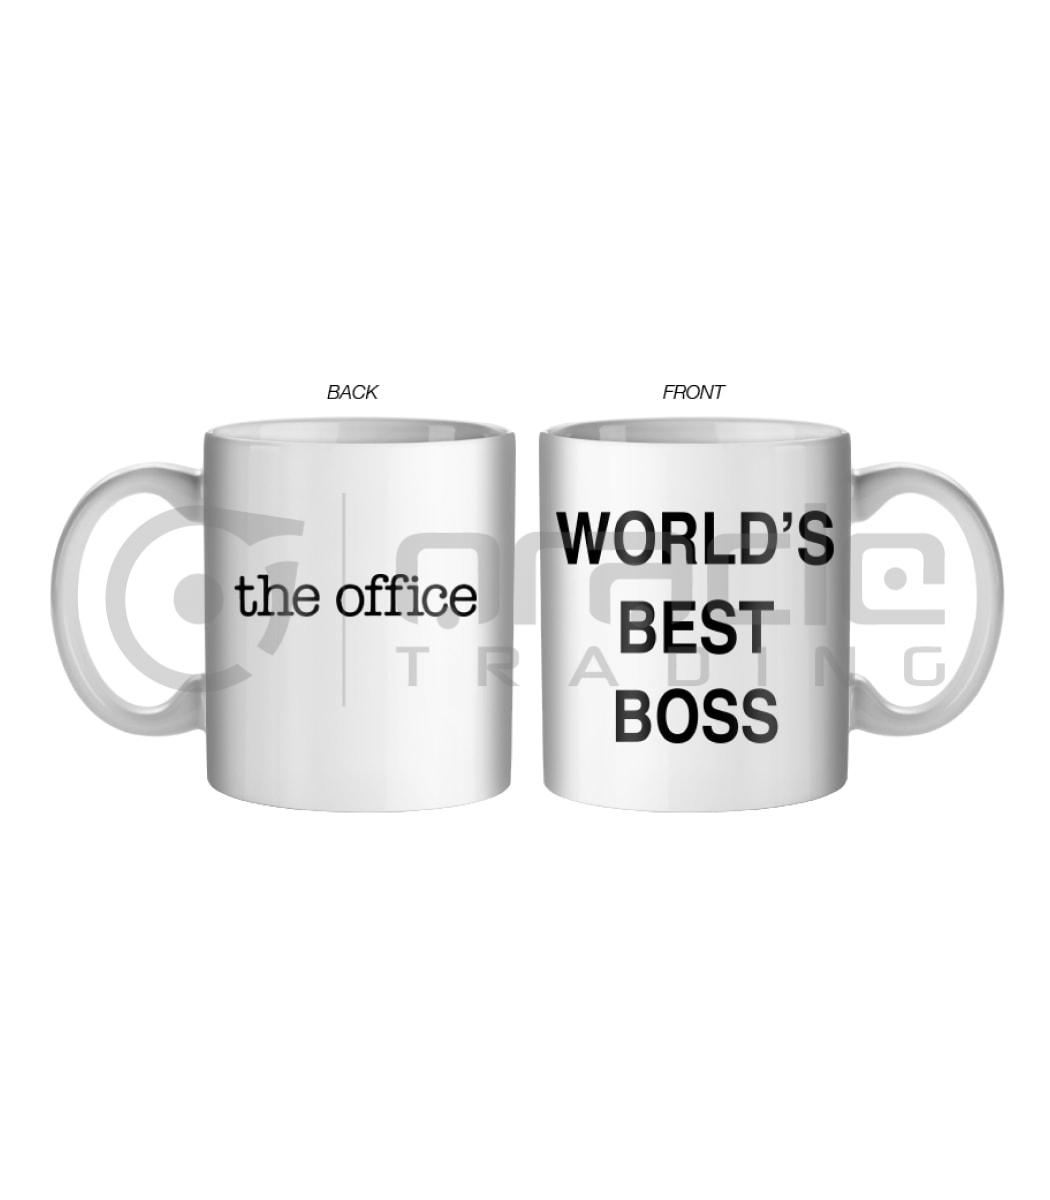 The Office Jumbo Mug - World's Best Boss